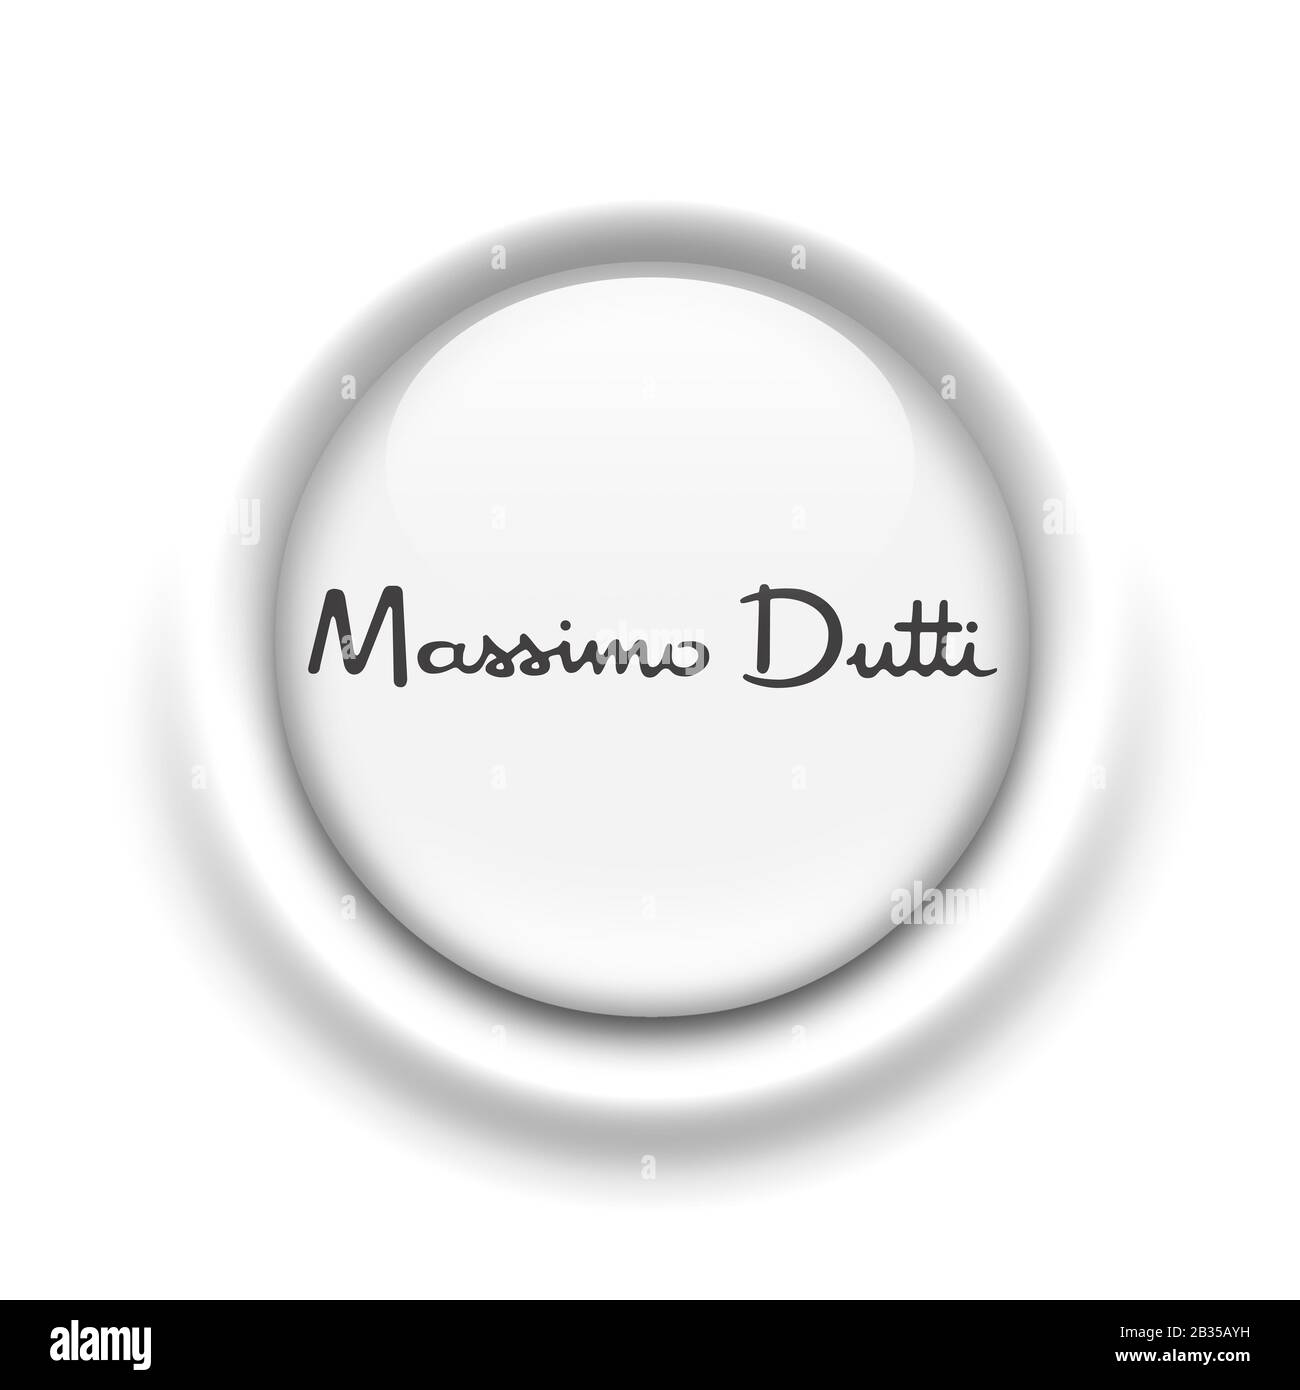 Massimo Dutti logo Stock Photo - Alamy